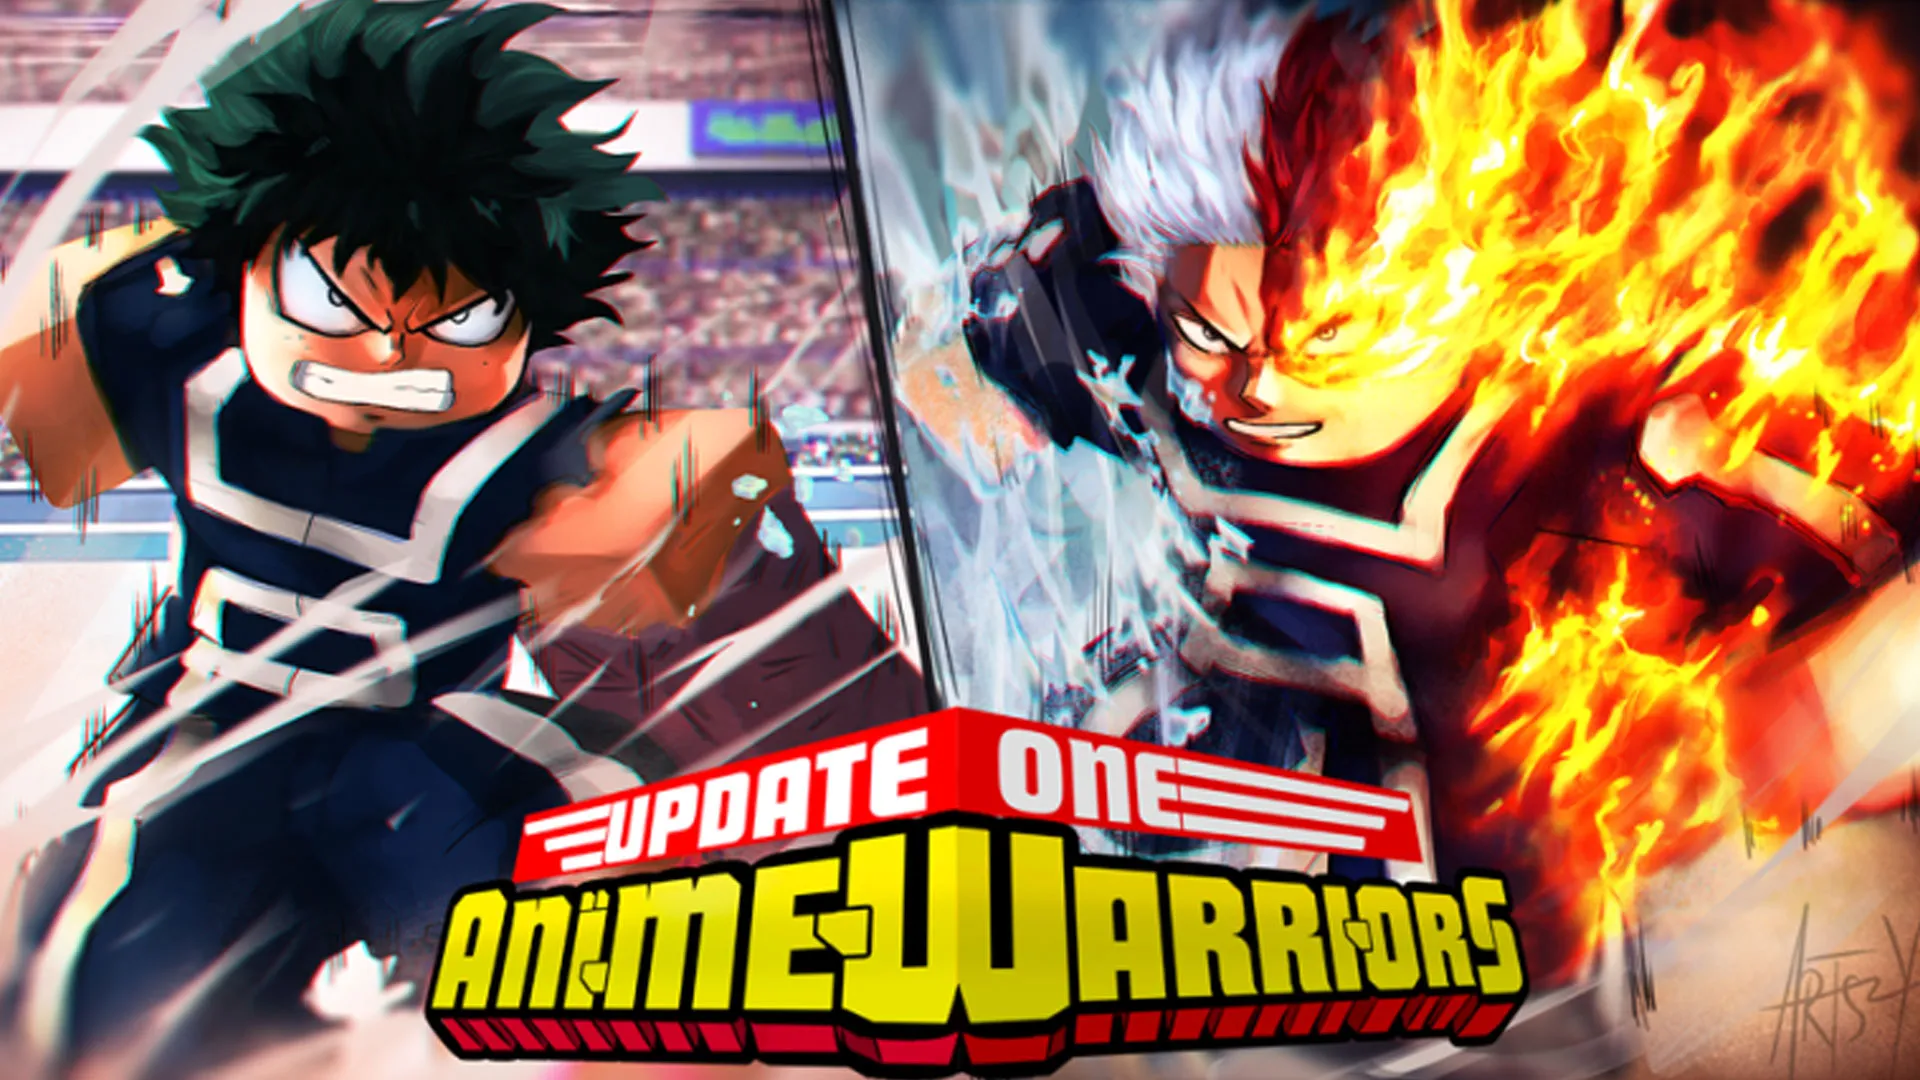 Anime Warriors AnimeWarriorsBZ  Twitter